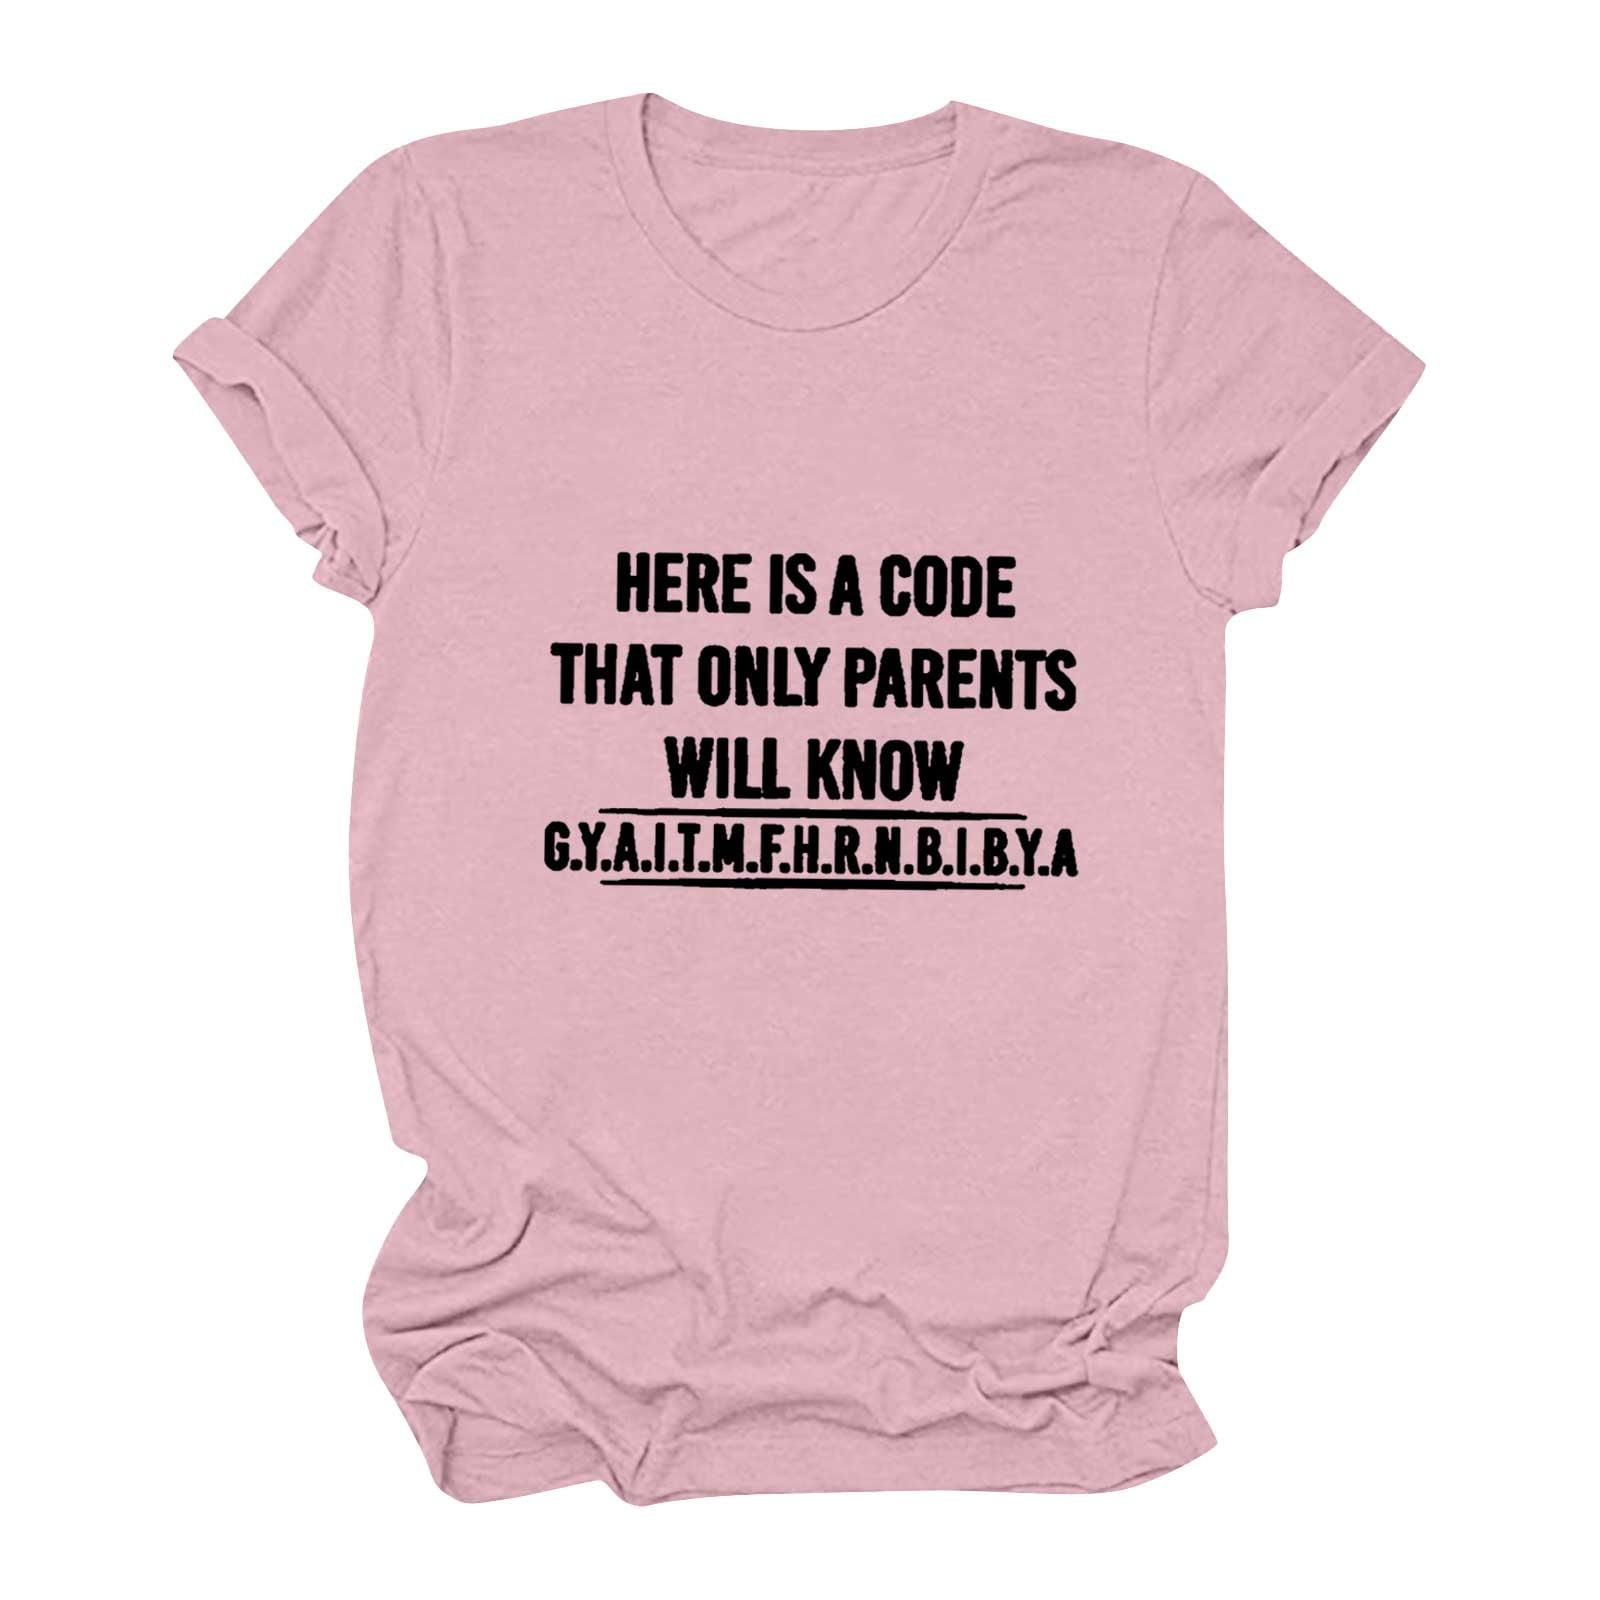 Lirclo Tshirts Shirts for Women Letter Teen Girls Funny Crewneck Short Sleeve Cute Pink XL Walmart.com